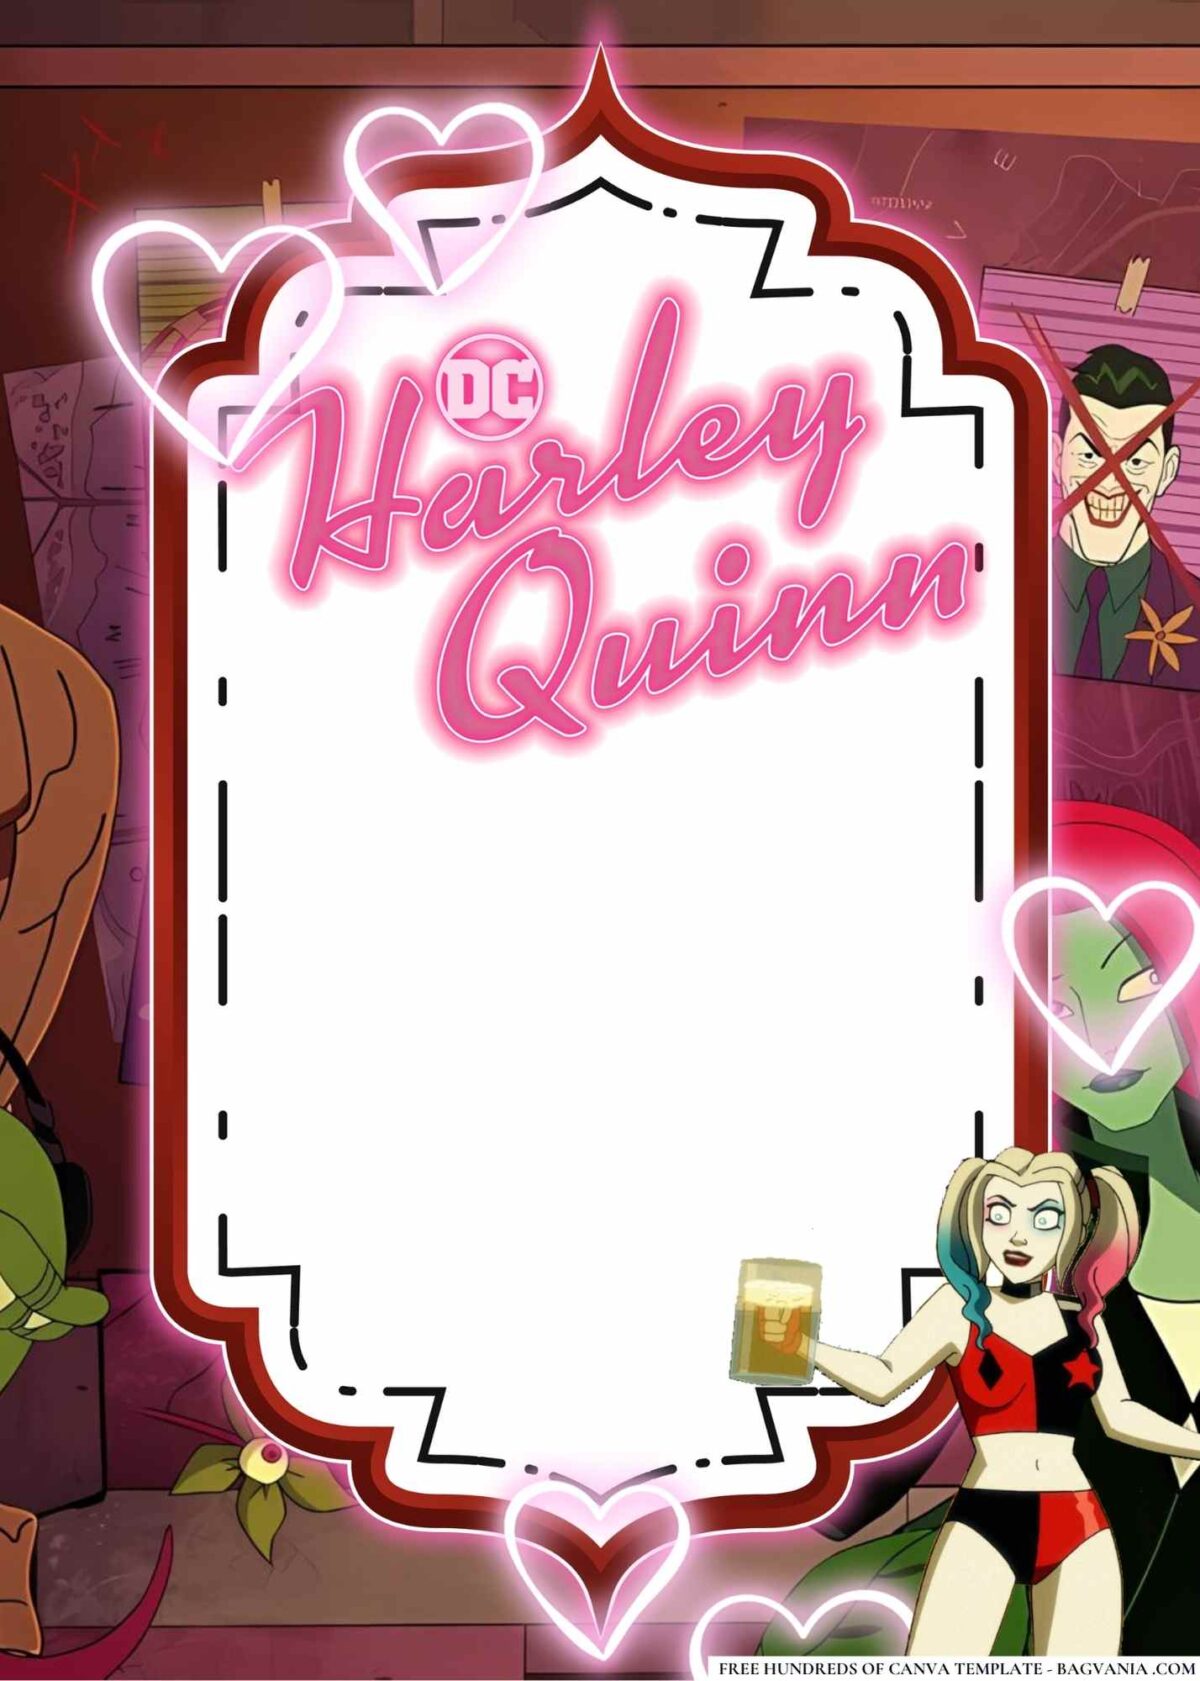 FREE Editable Harley Quinn Birthday Invitations